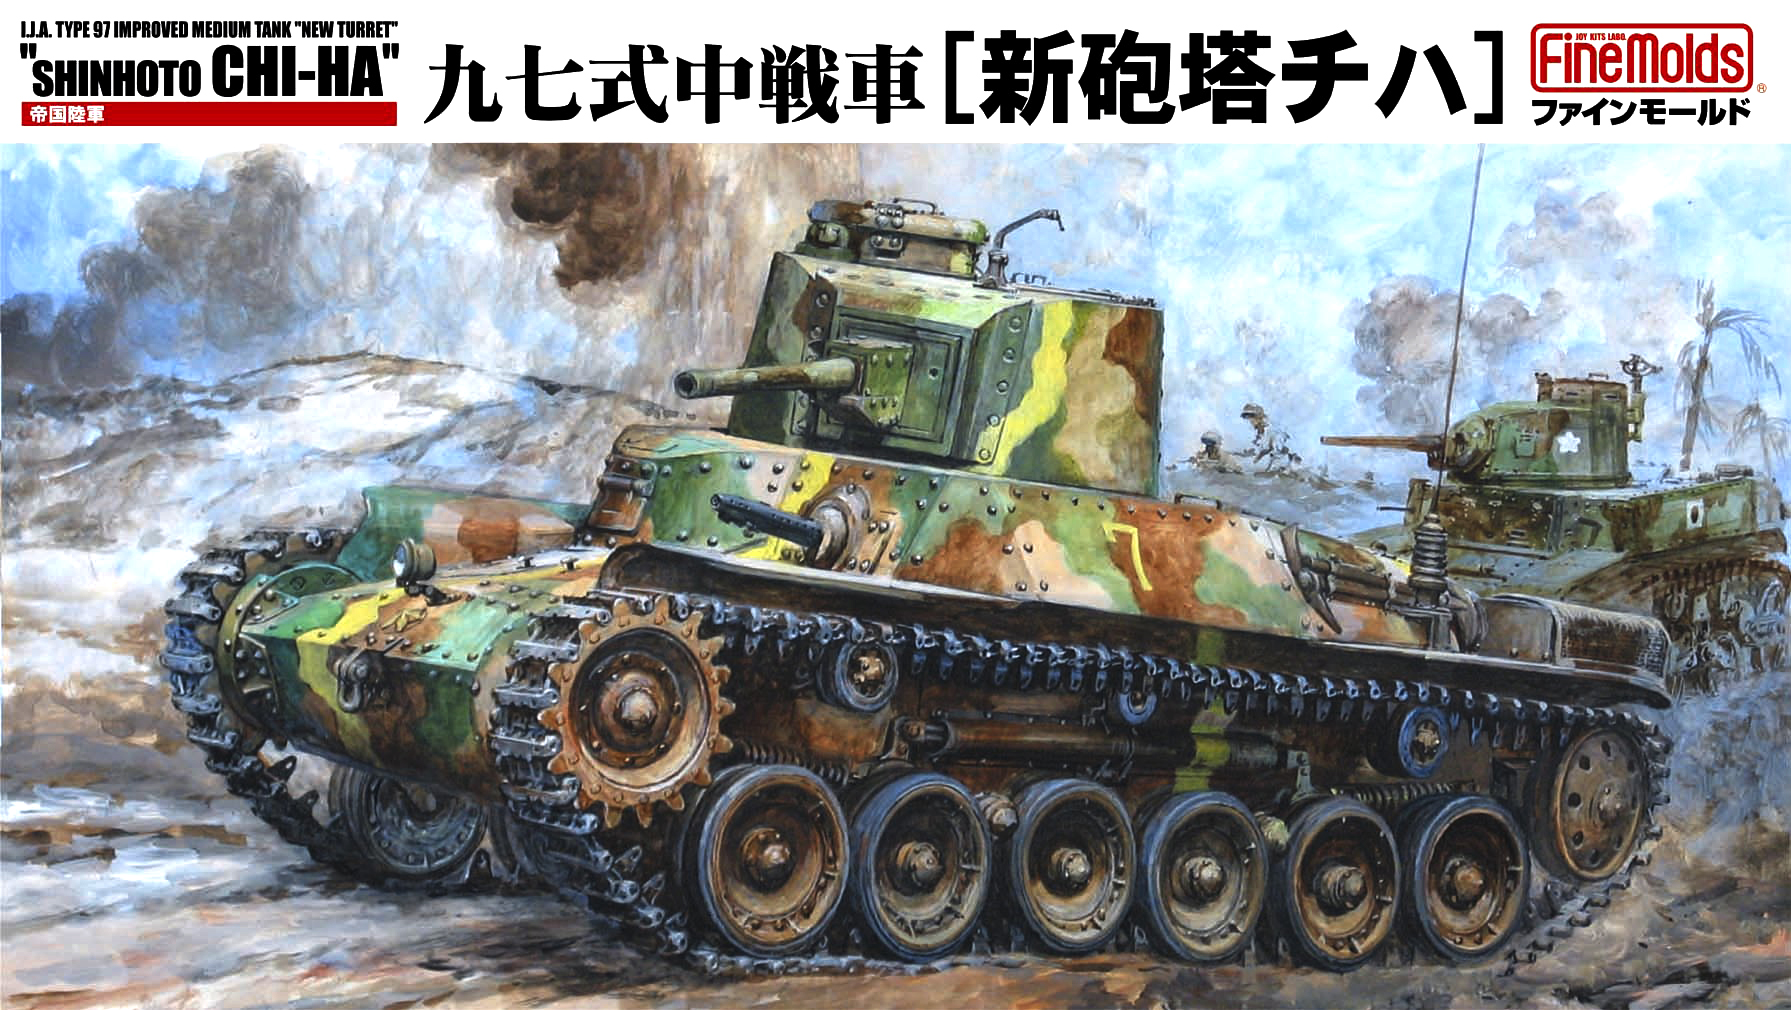 FM21  техника и вооружение  IJA Type97 Improved Medium Tank 'New turret' "SHINHOTO CHI-HA" (1:35)